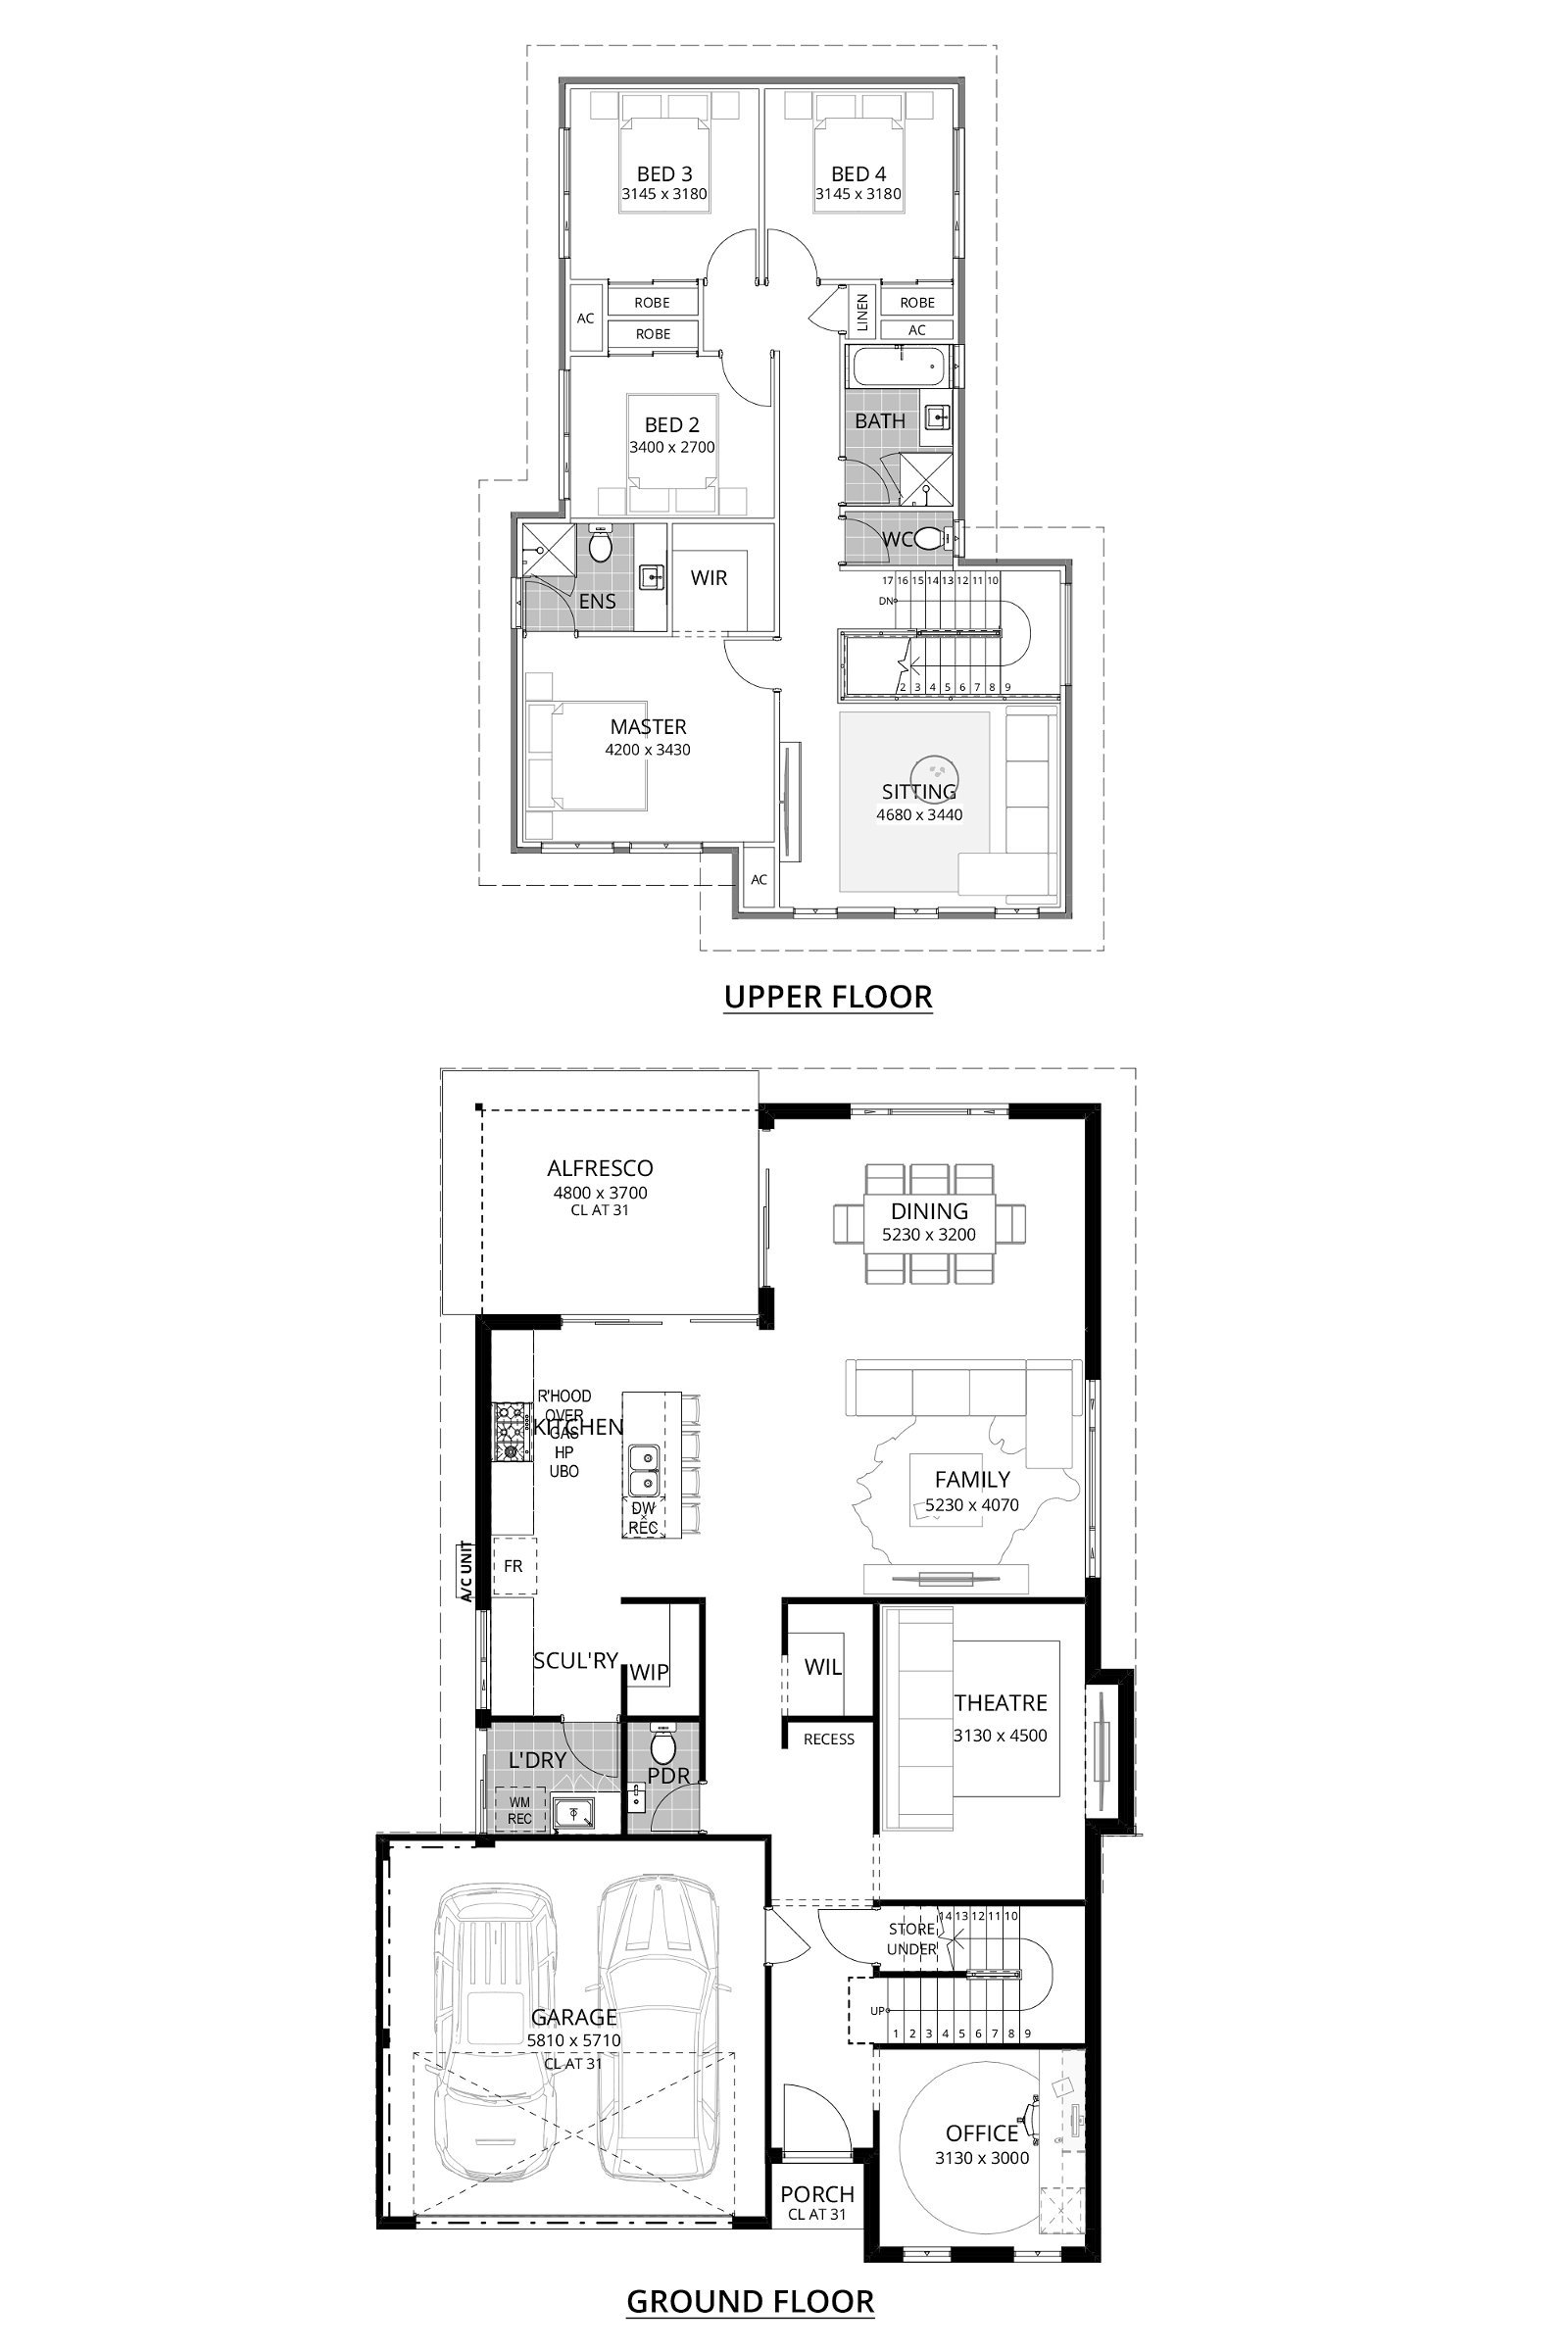 Residential Attitudes - Fresh Prince - Floorplan - Fresh Prince Floorplan Website